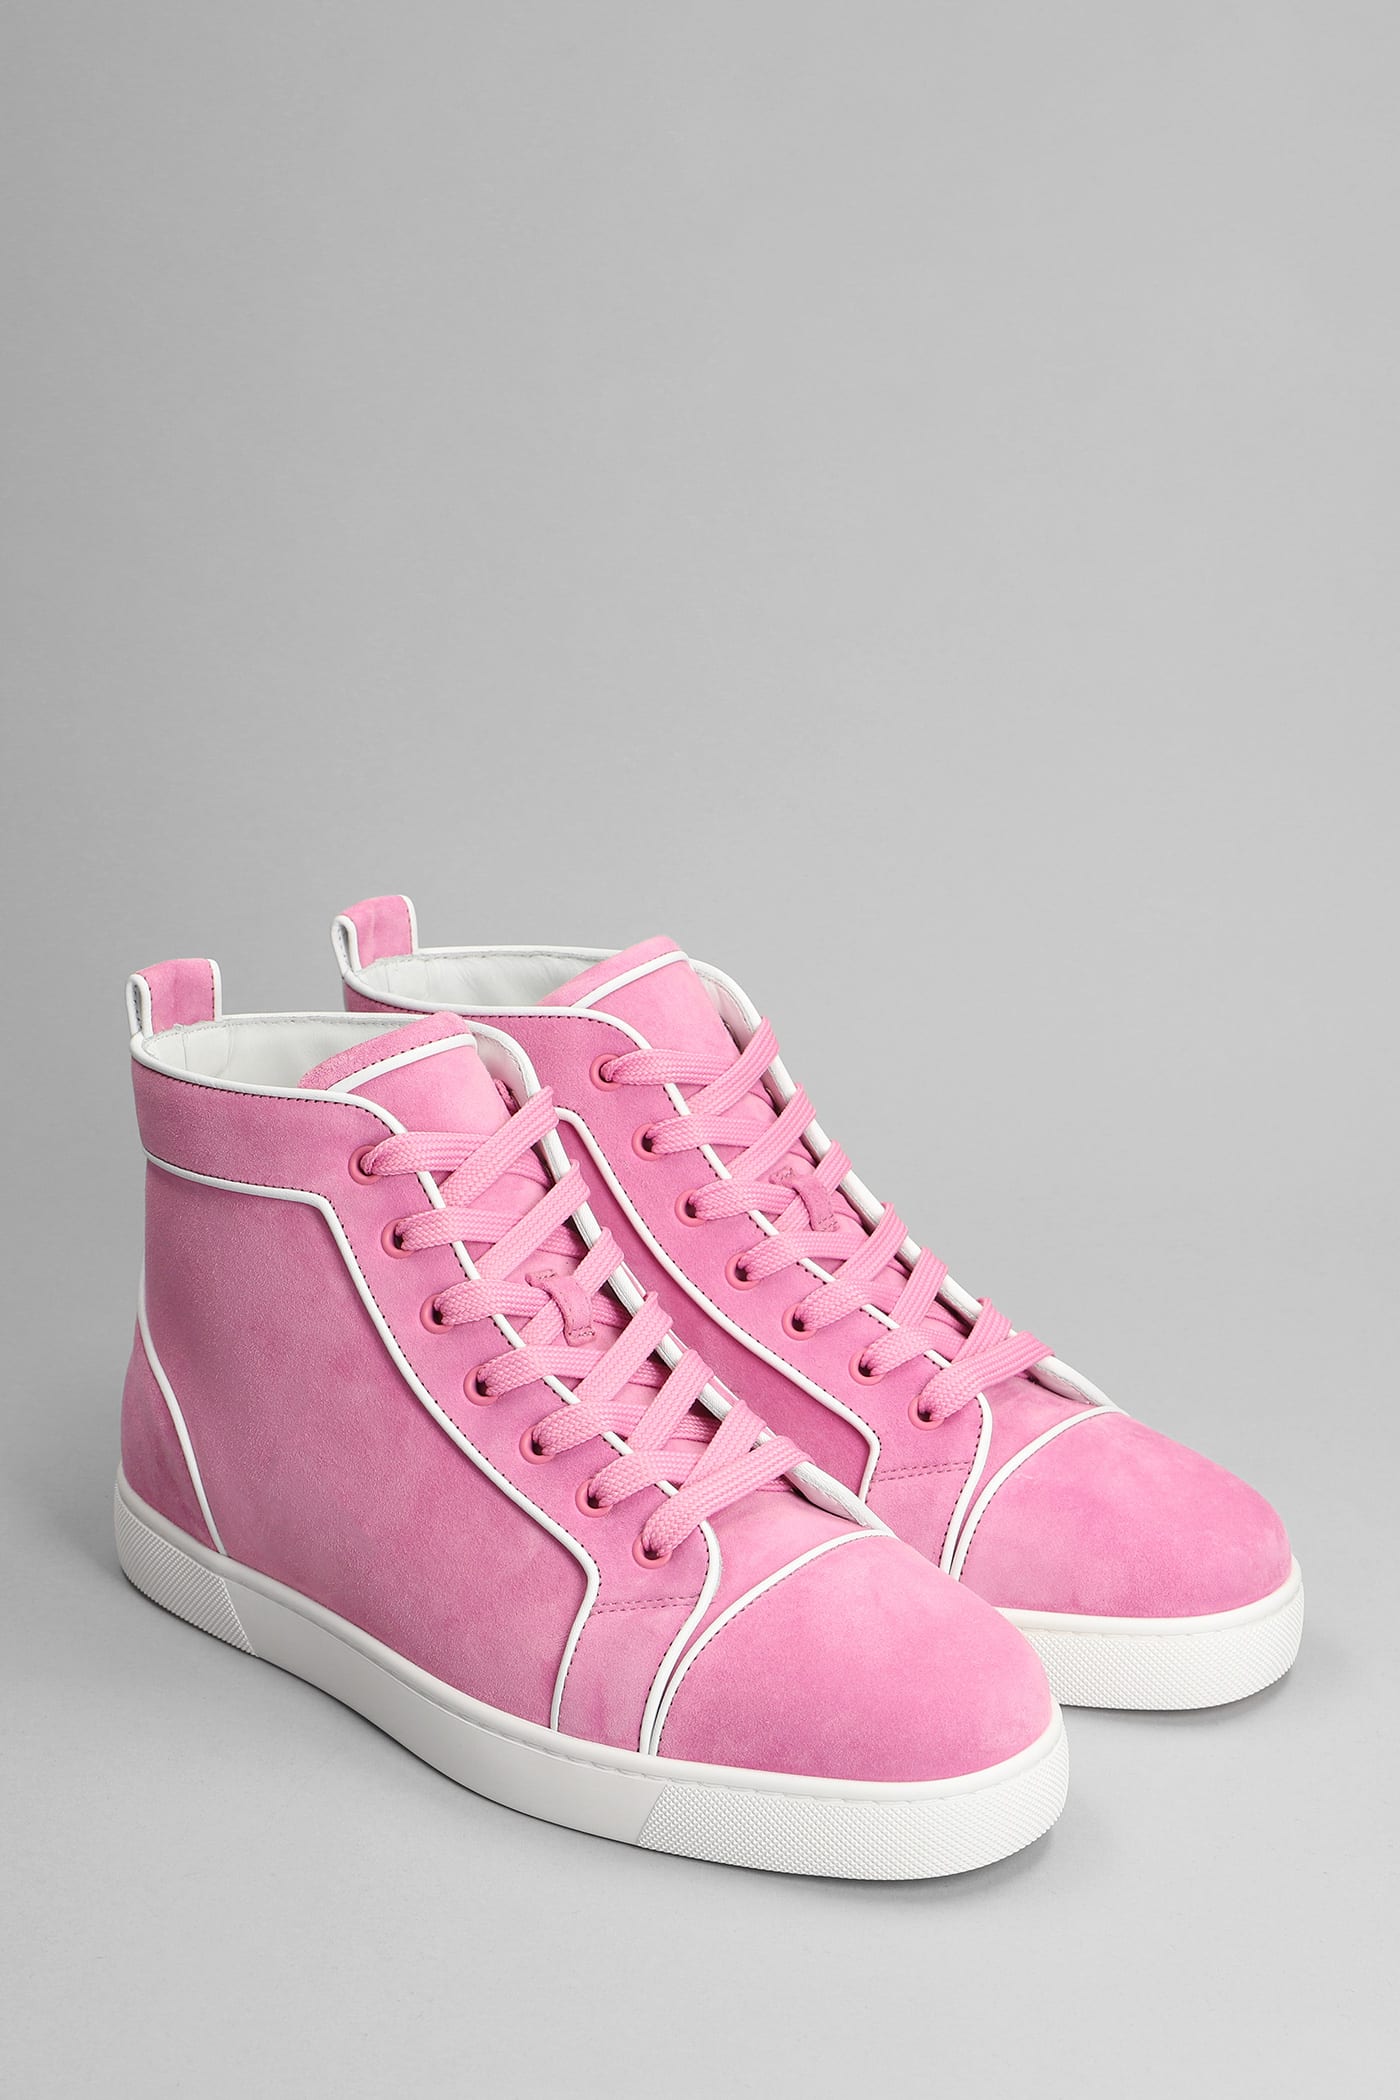 Shop Christian Louboutin Varsilouis Flat Sneakers In Rose-pink Suede